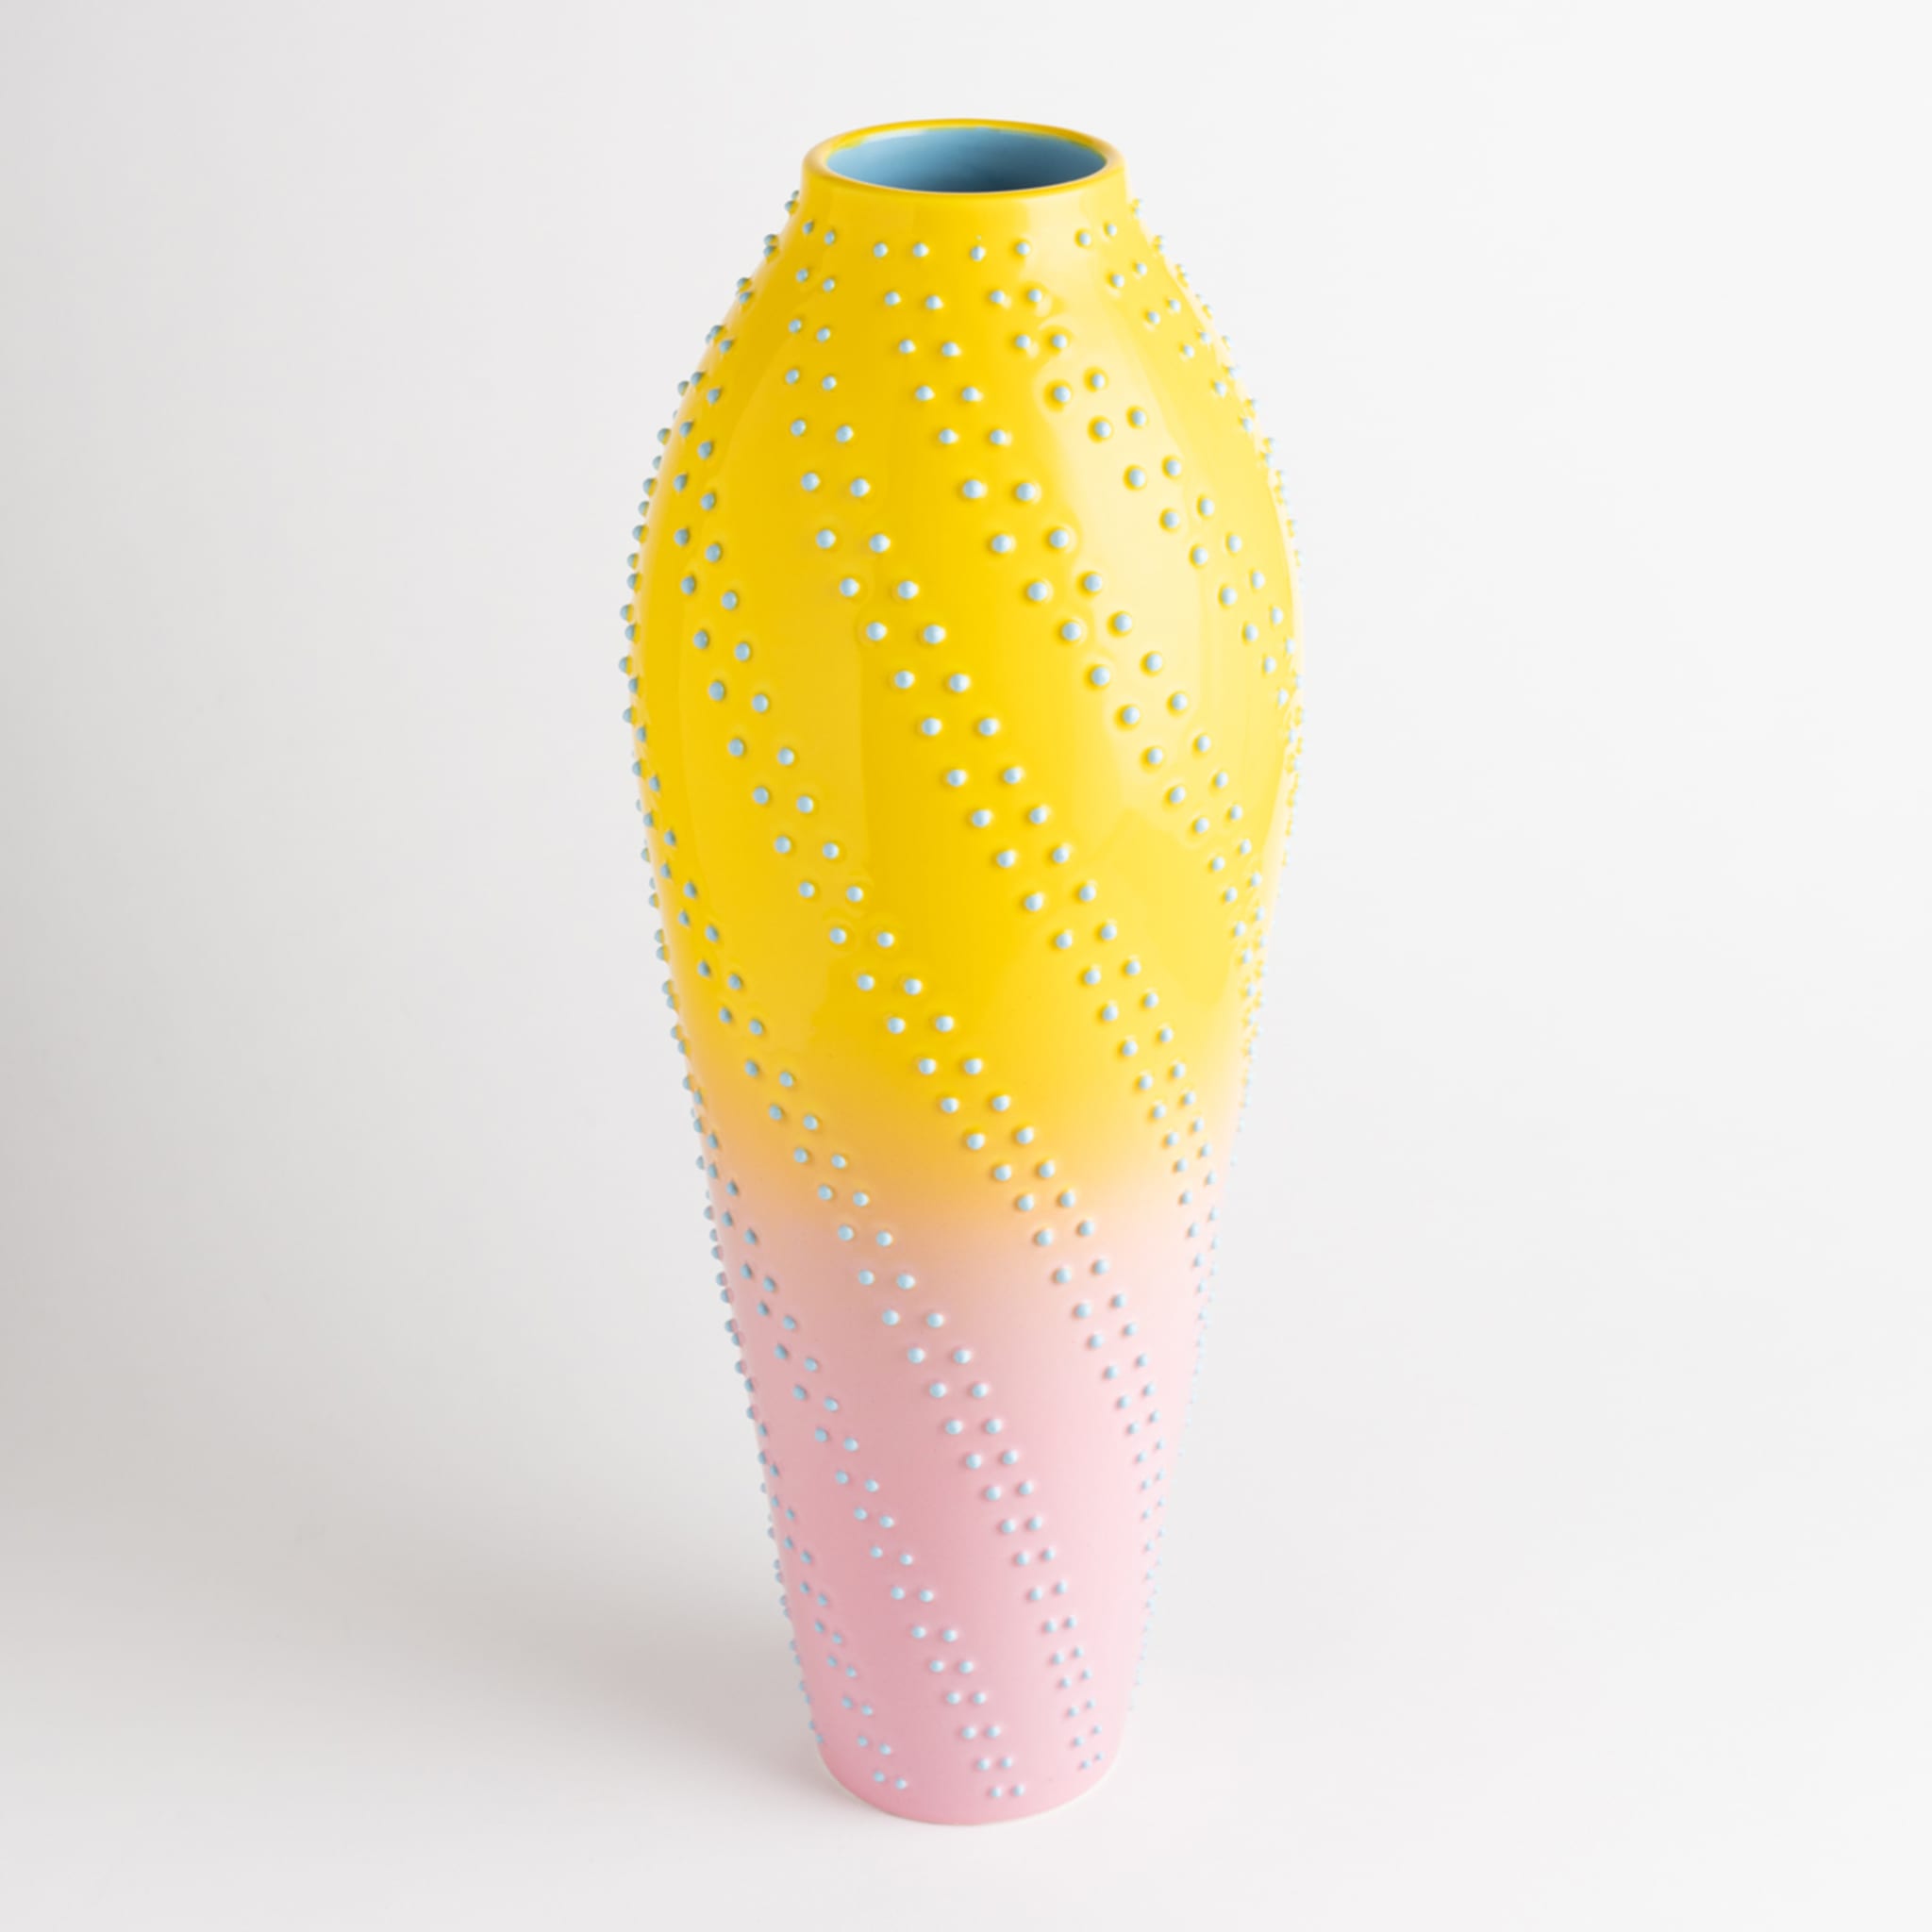 Princex Vase by Adam Nathaniel Furman - Alternative view 2